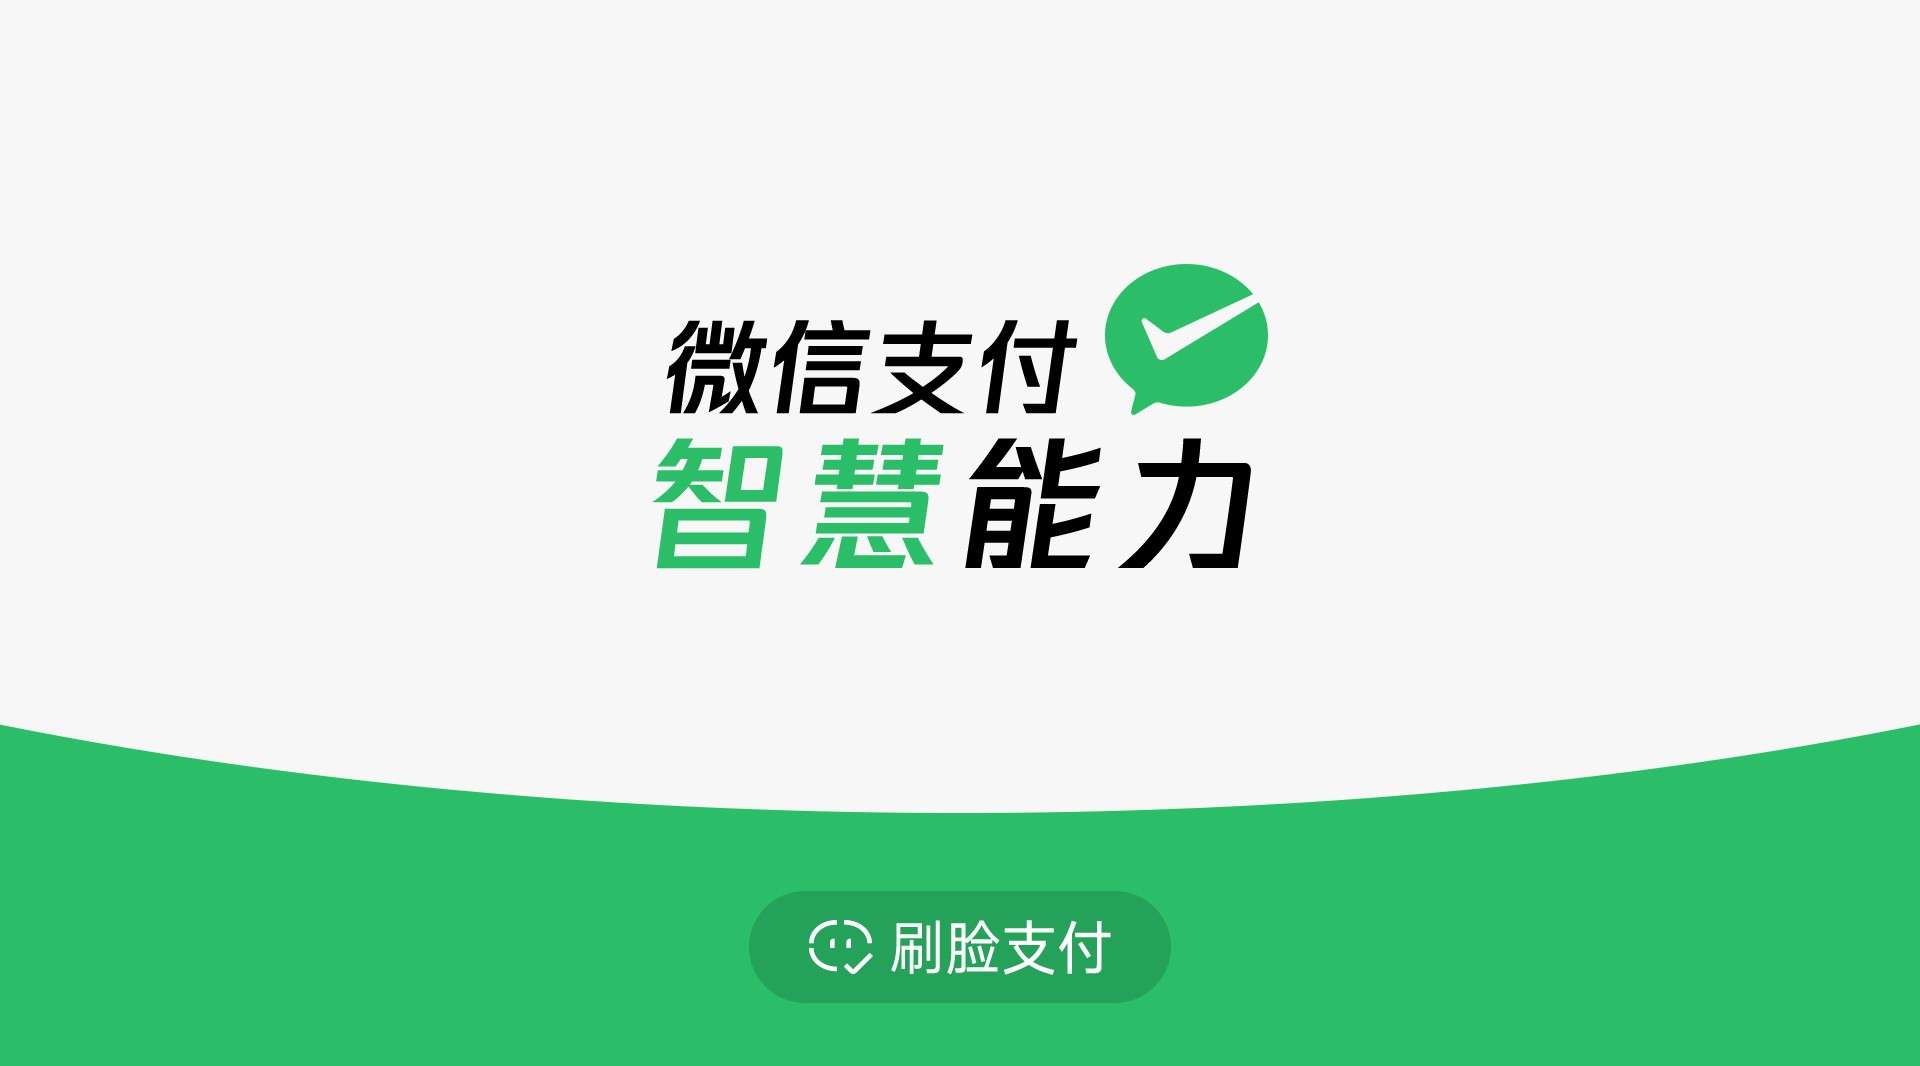 WeChat Pay 智慧能力-刷脸支付